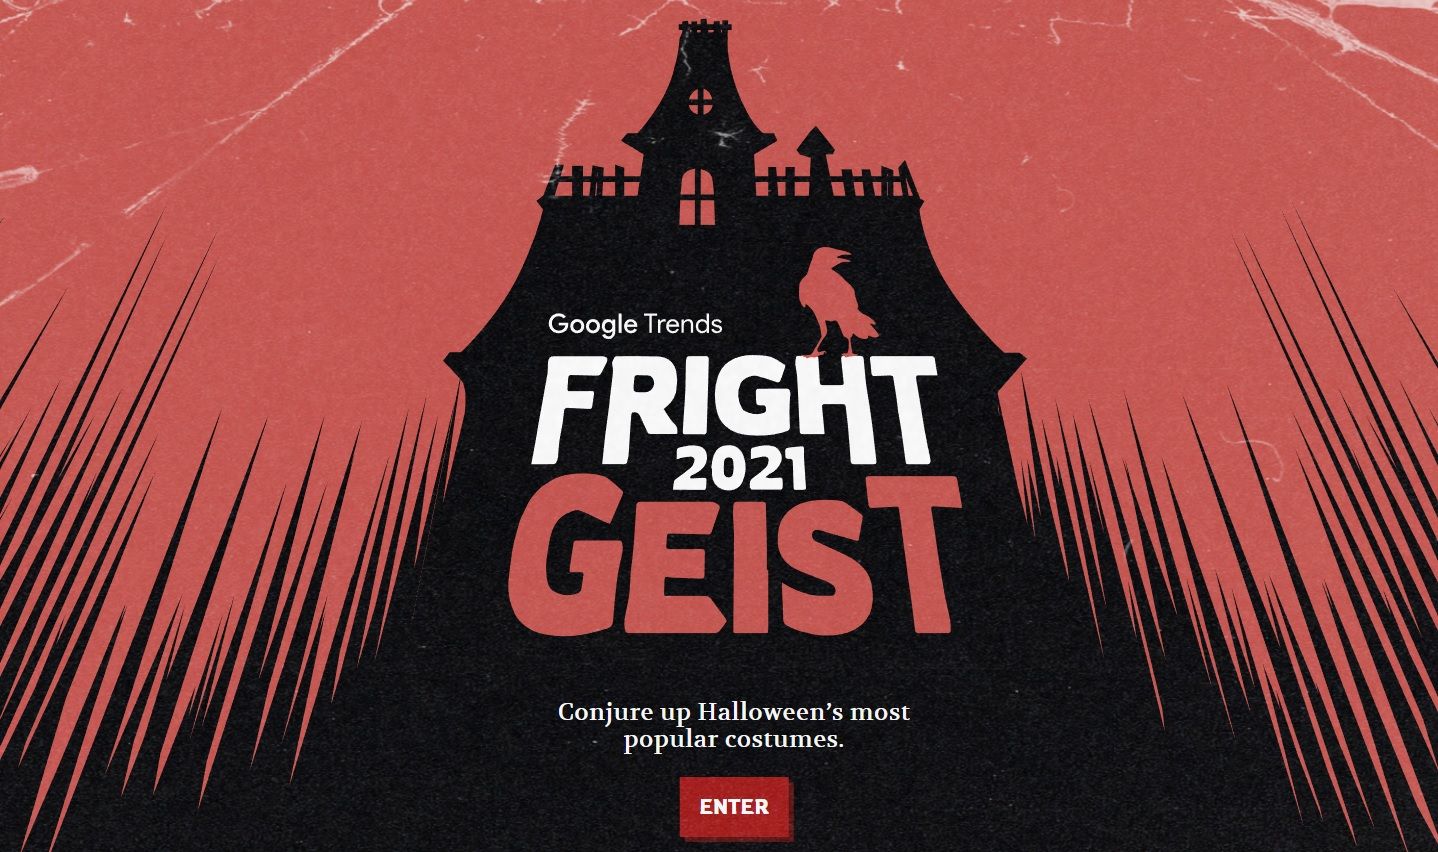 Frightgeist homepage